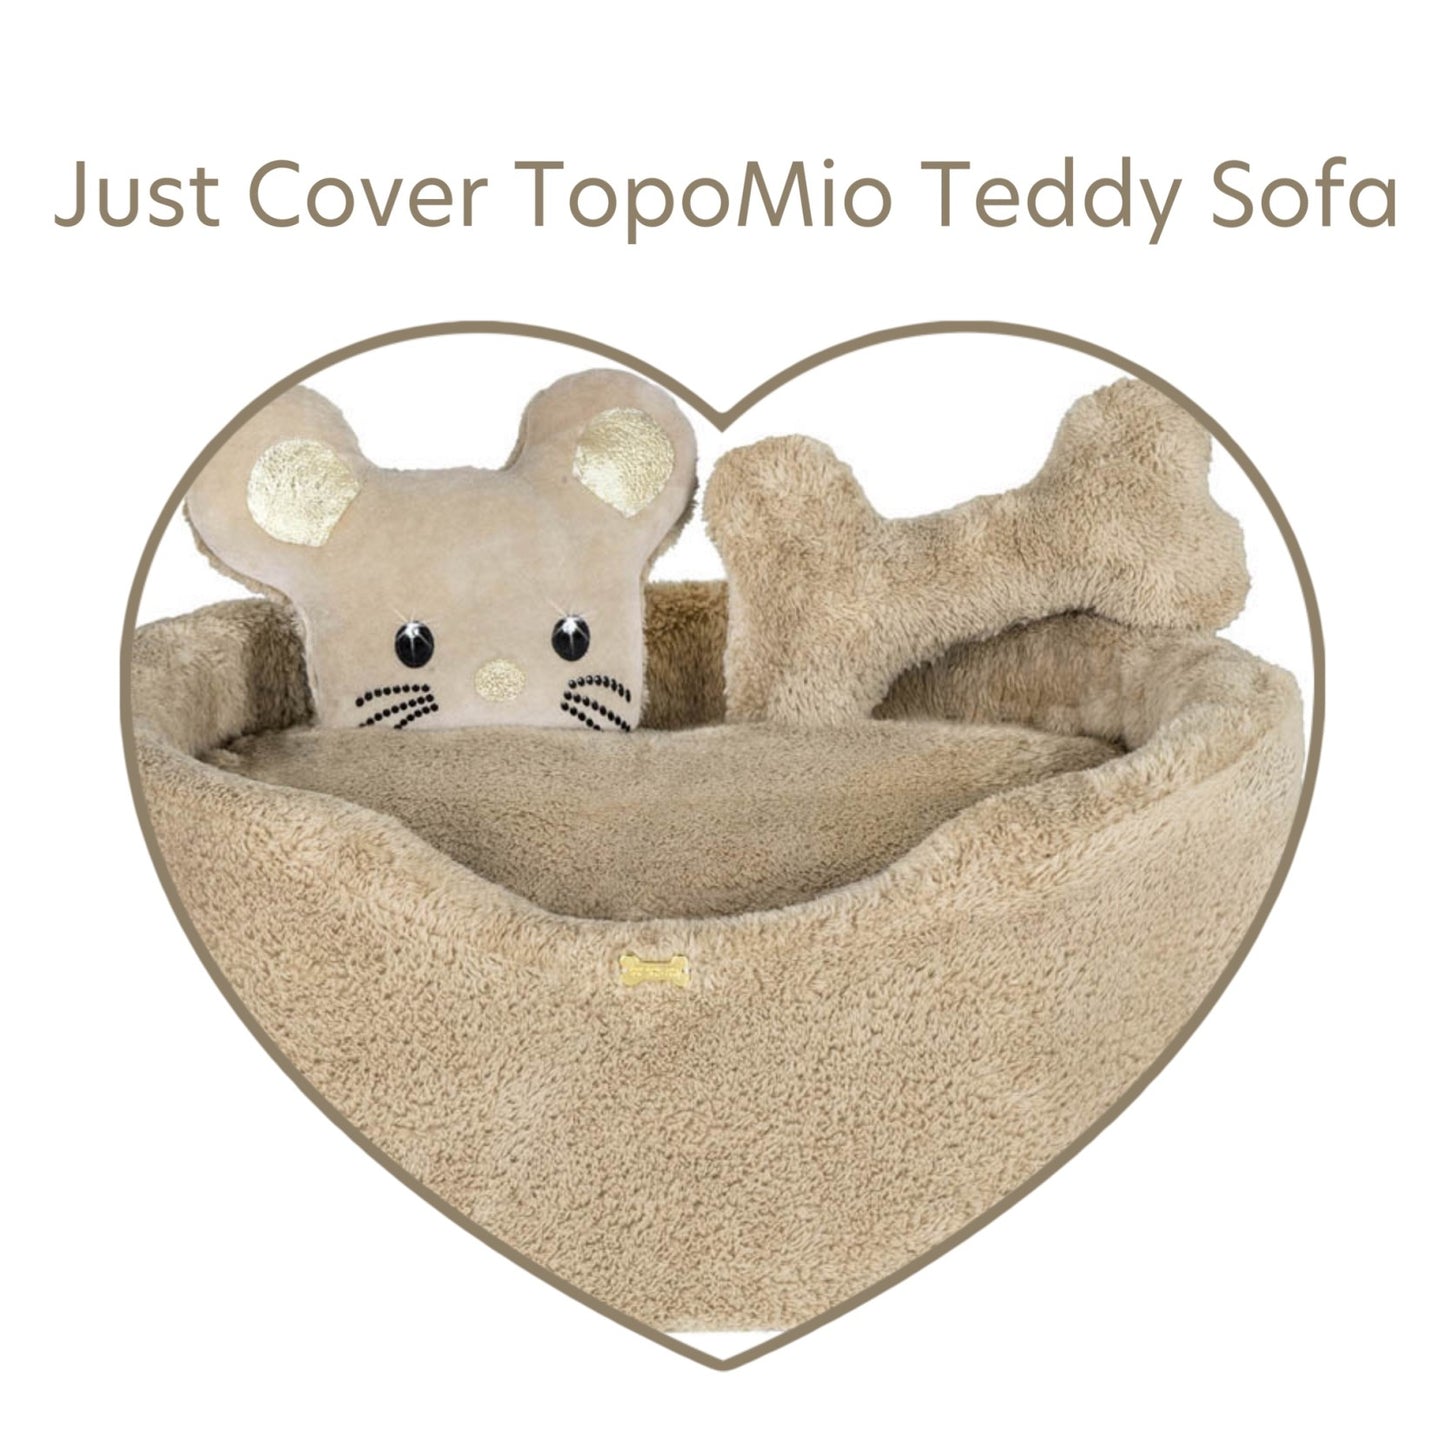  For Pets Only Panier Topomio Teddy Sofa Camel